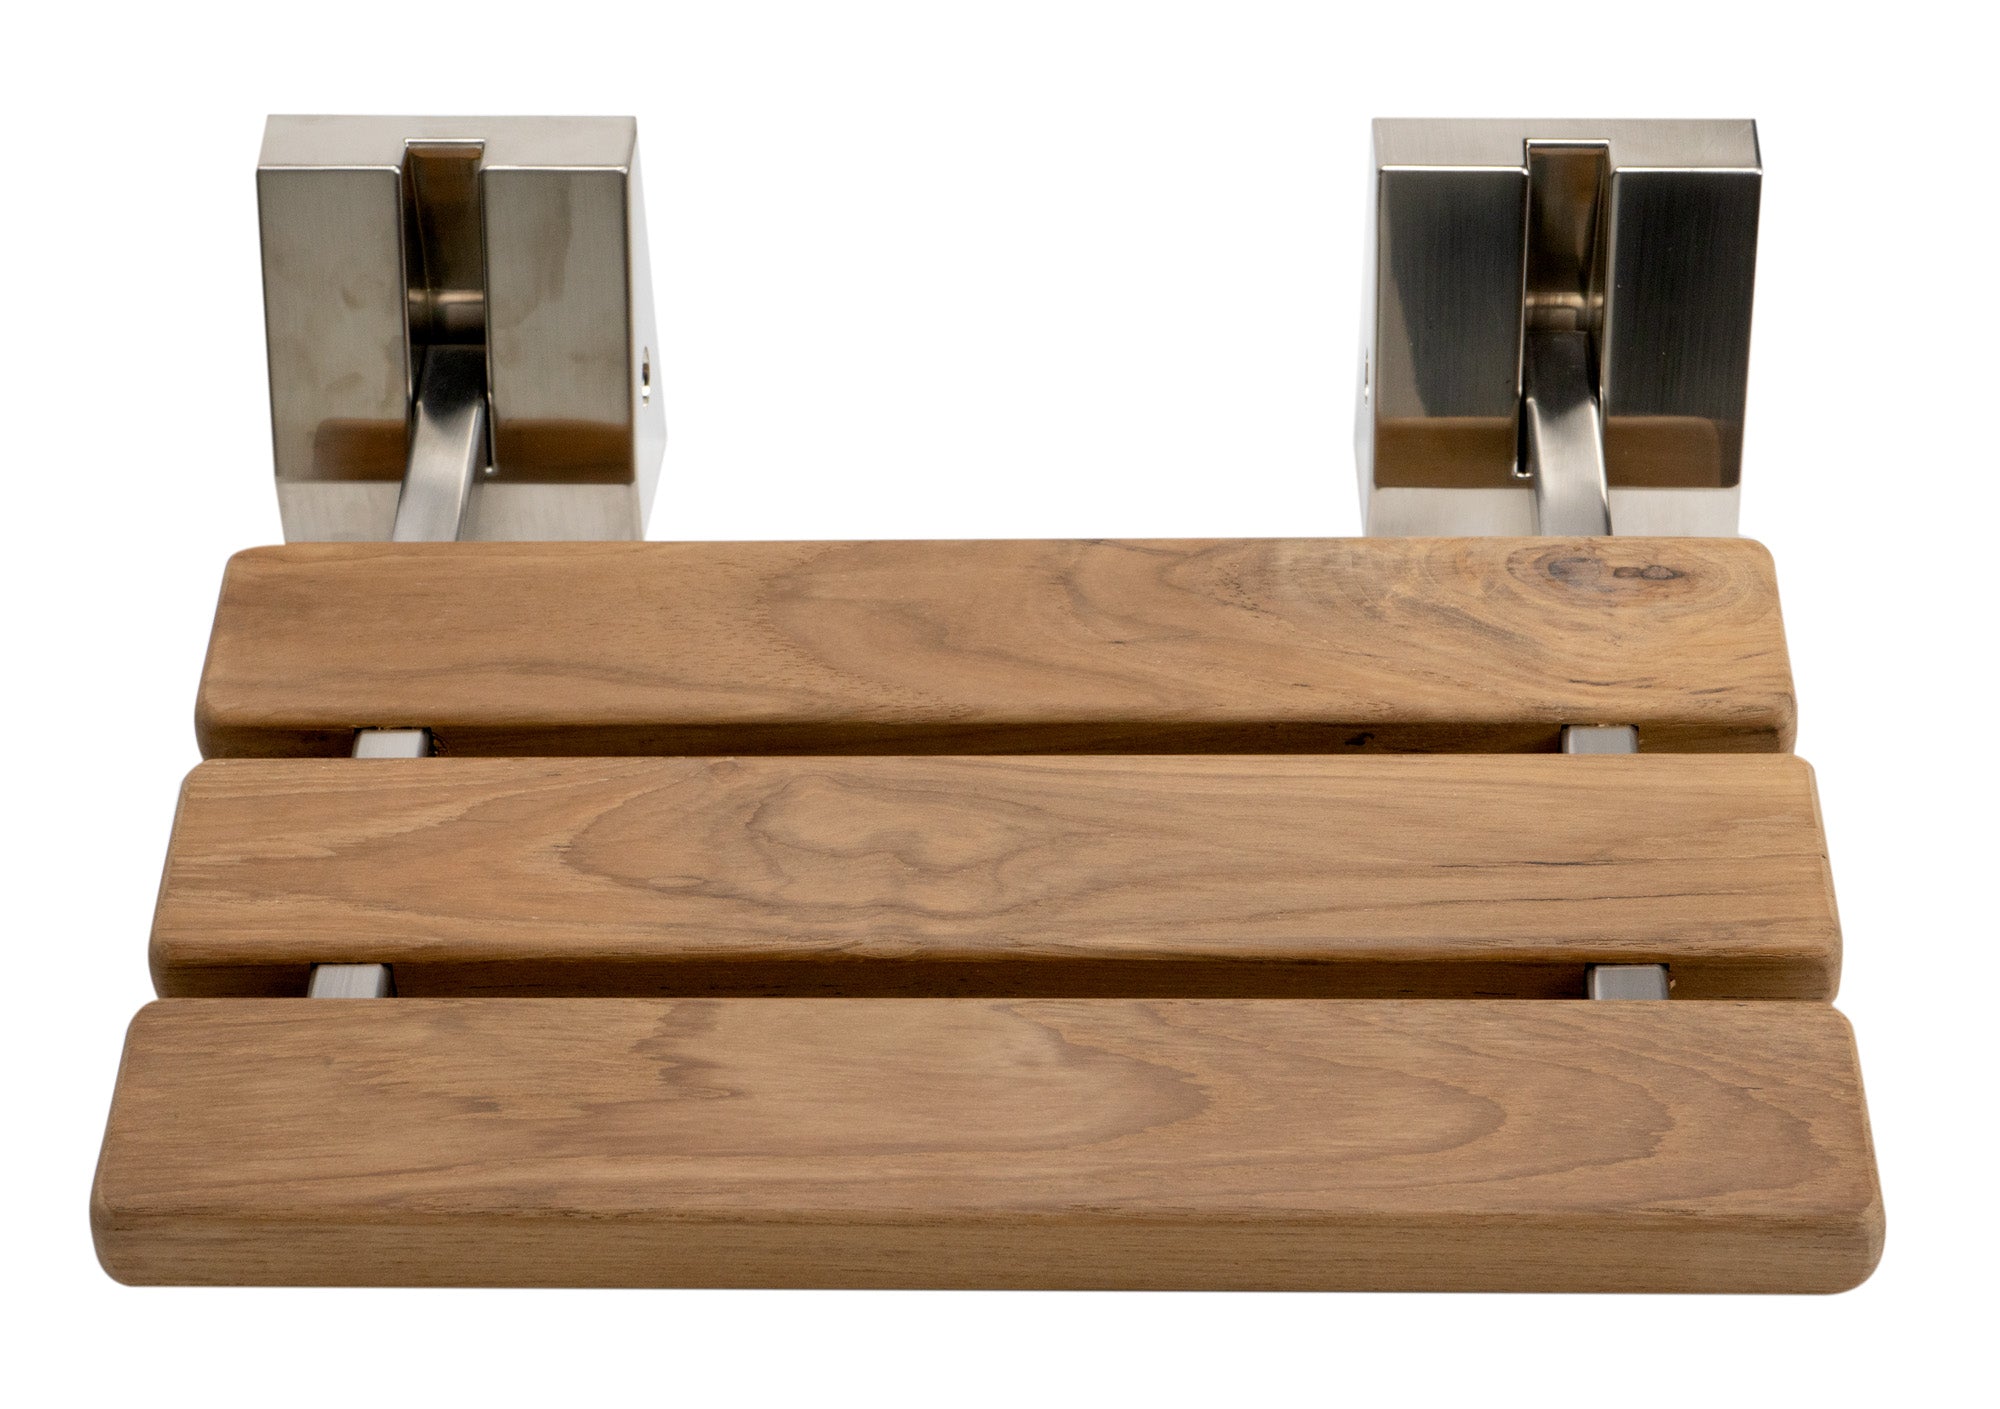 Alfi Brand 16" Folding Teak Wood Rectangle Shower Seat Bench-DirectSinks